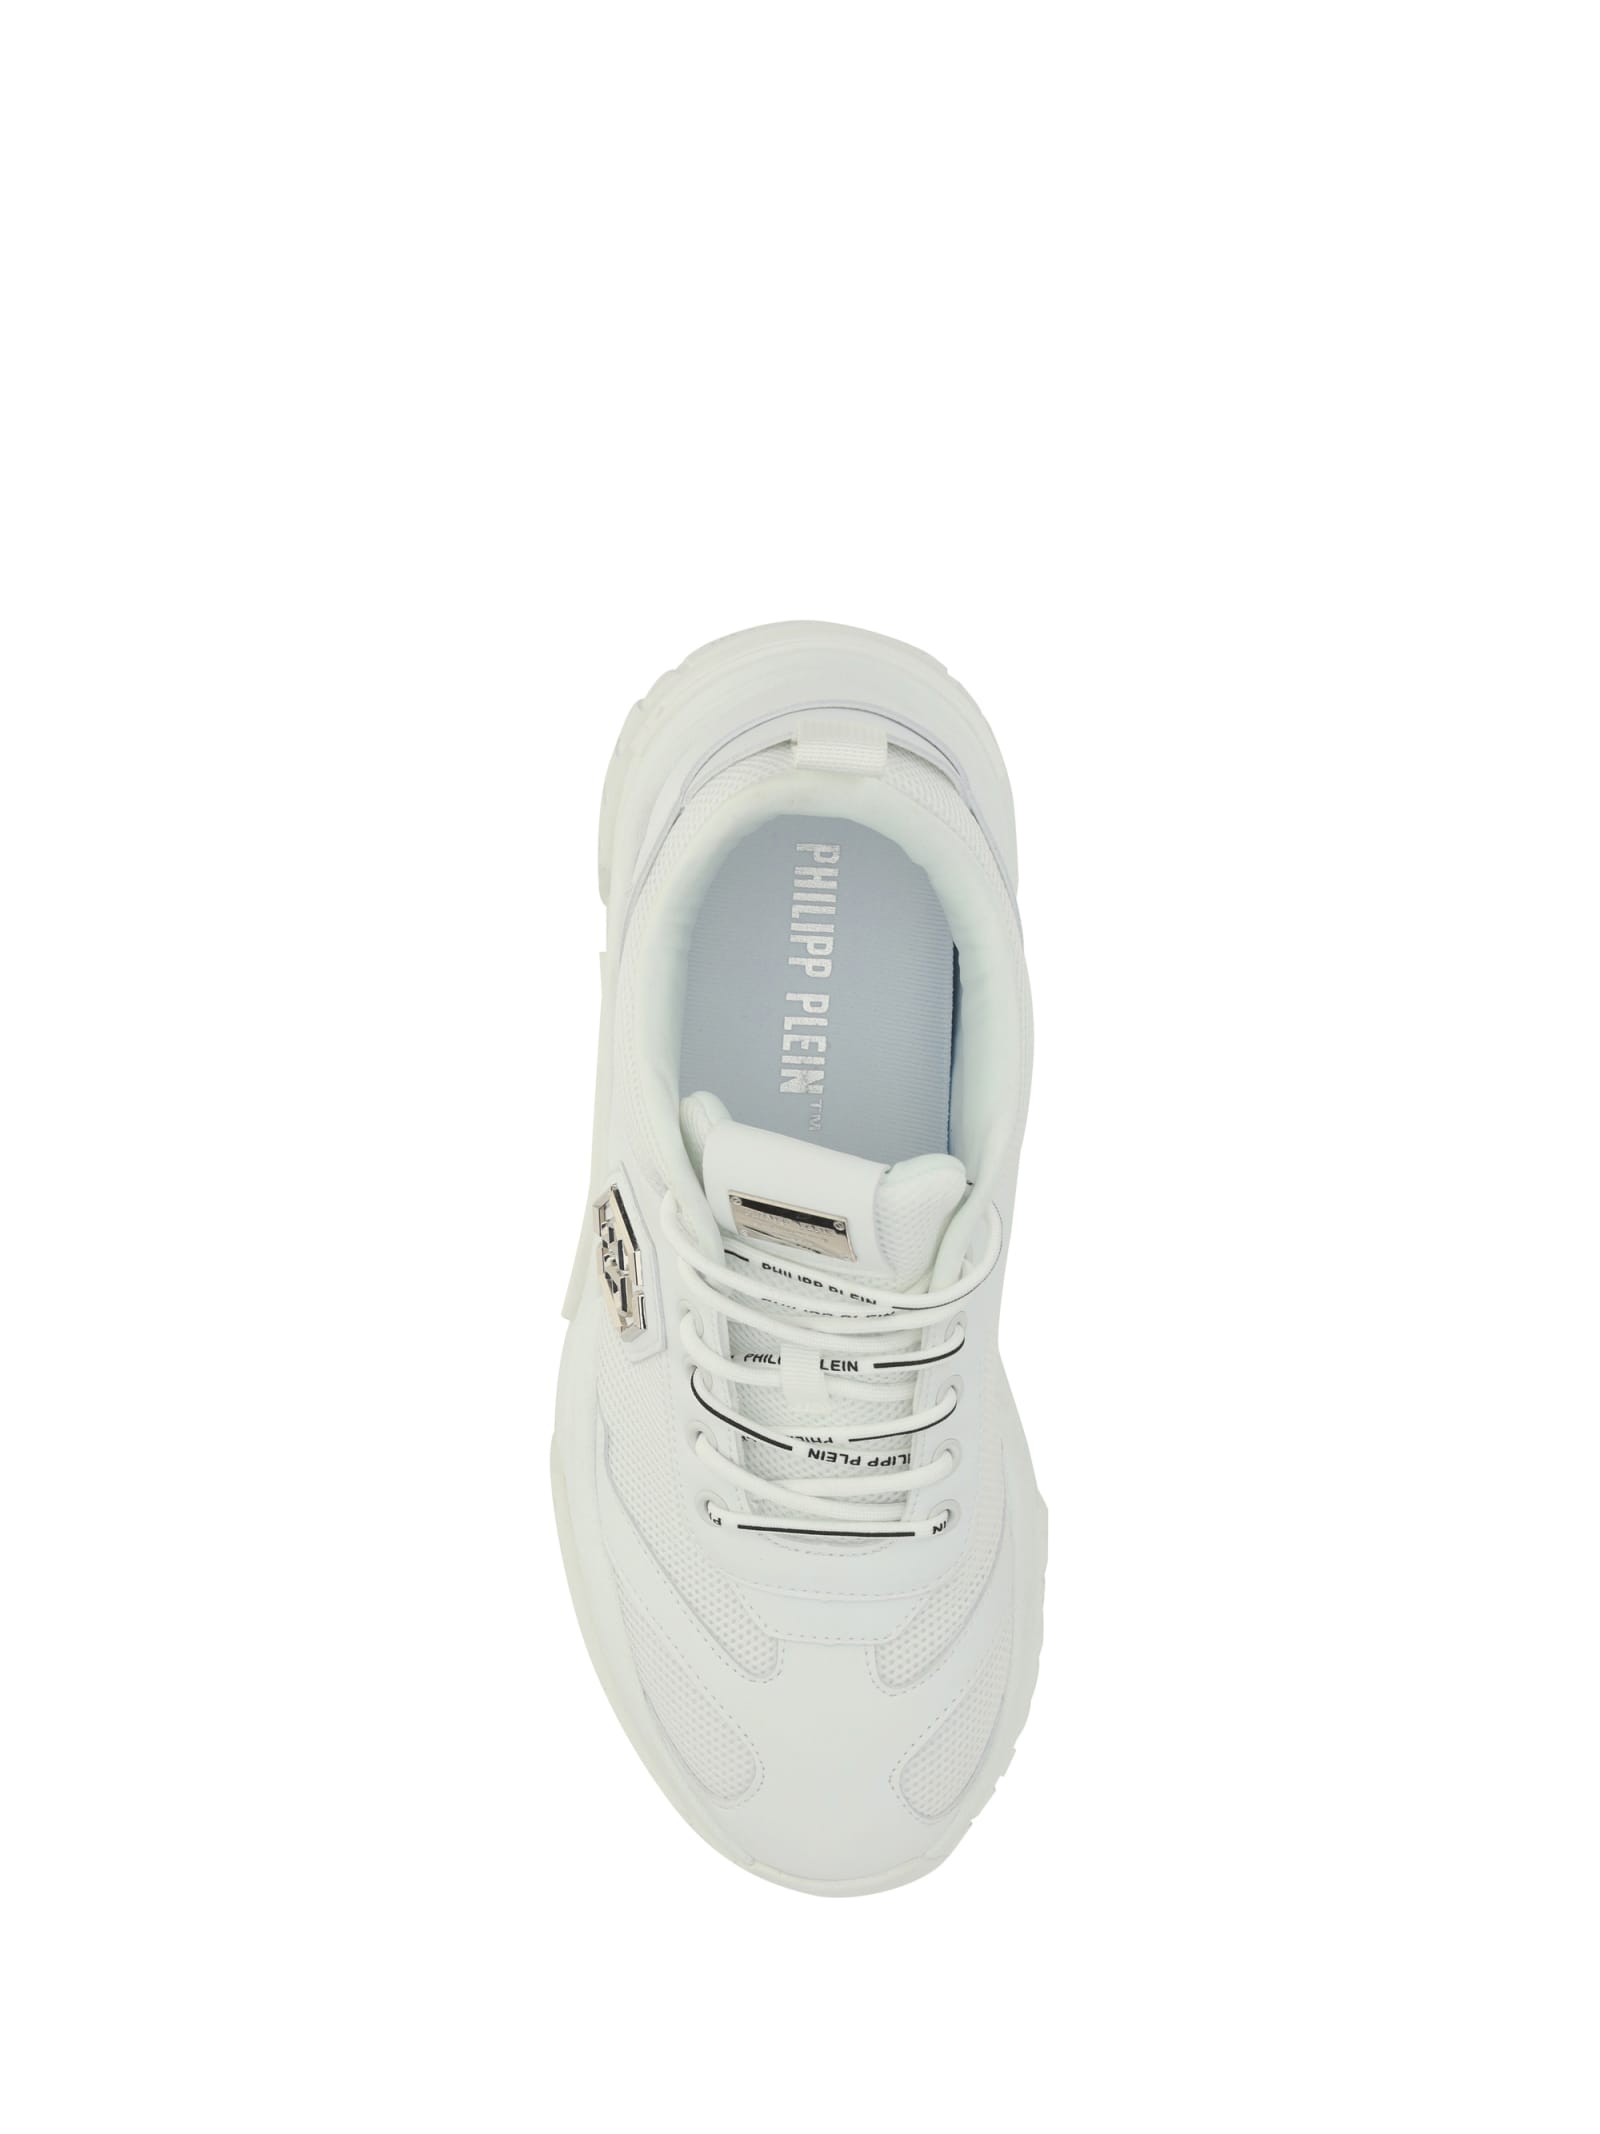 Shop Philipp Plein Predator Sneakers In White / White